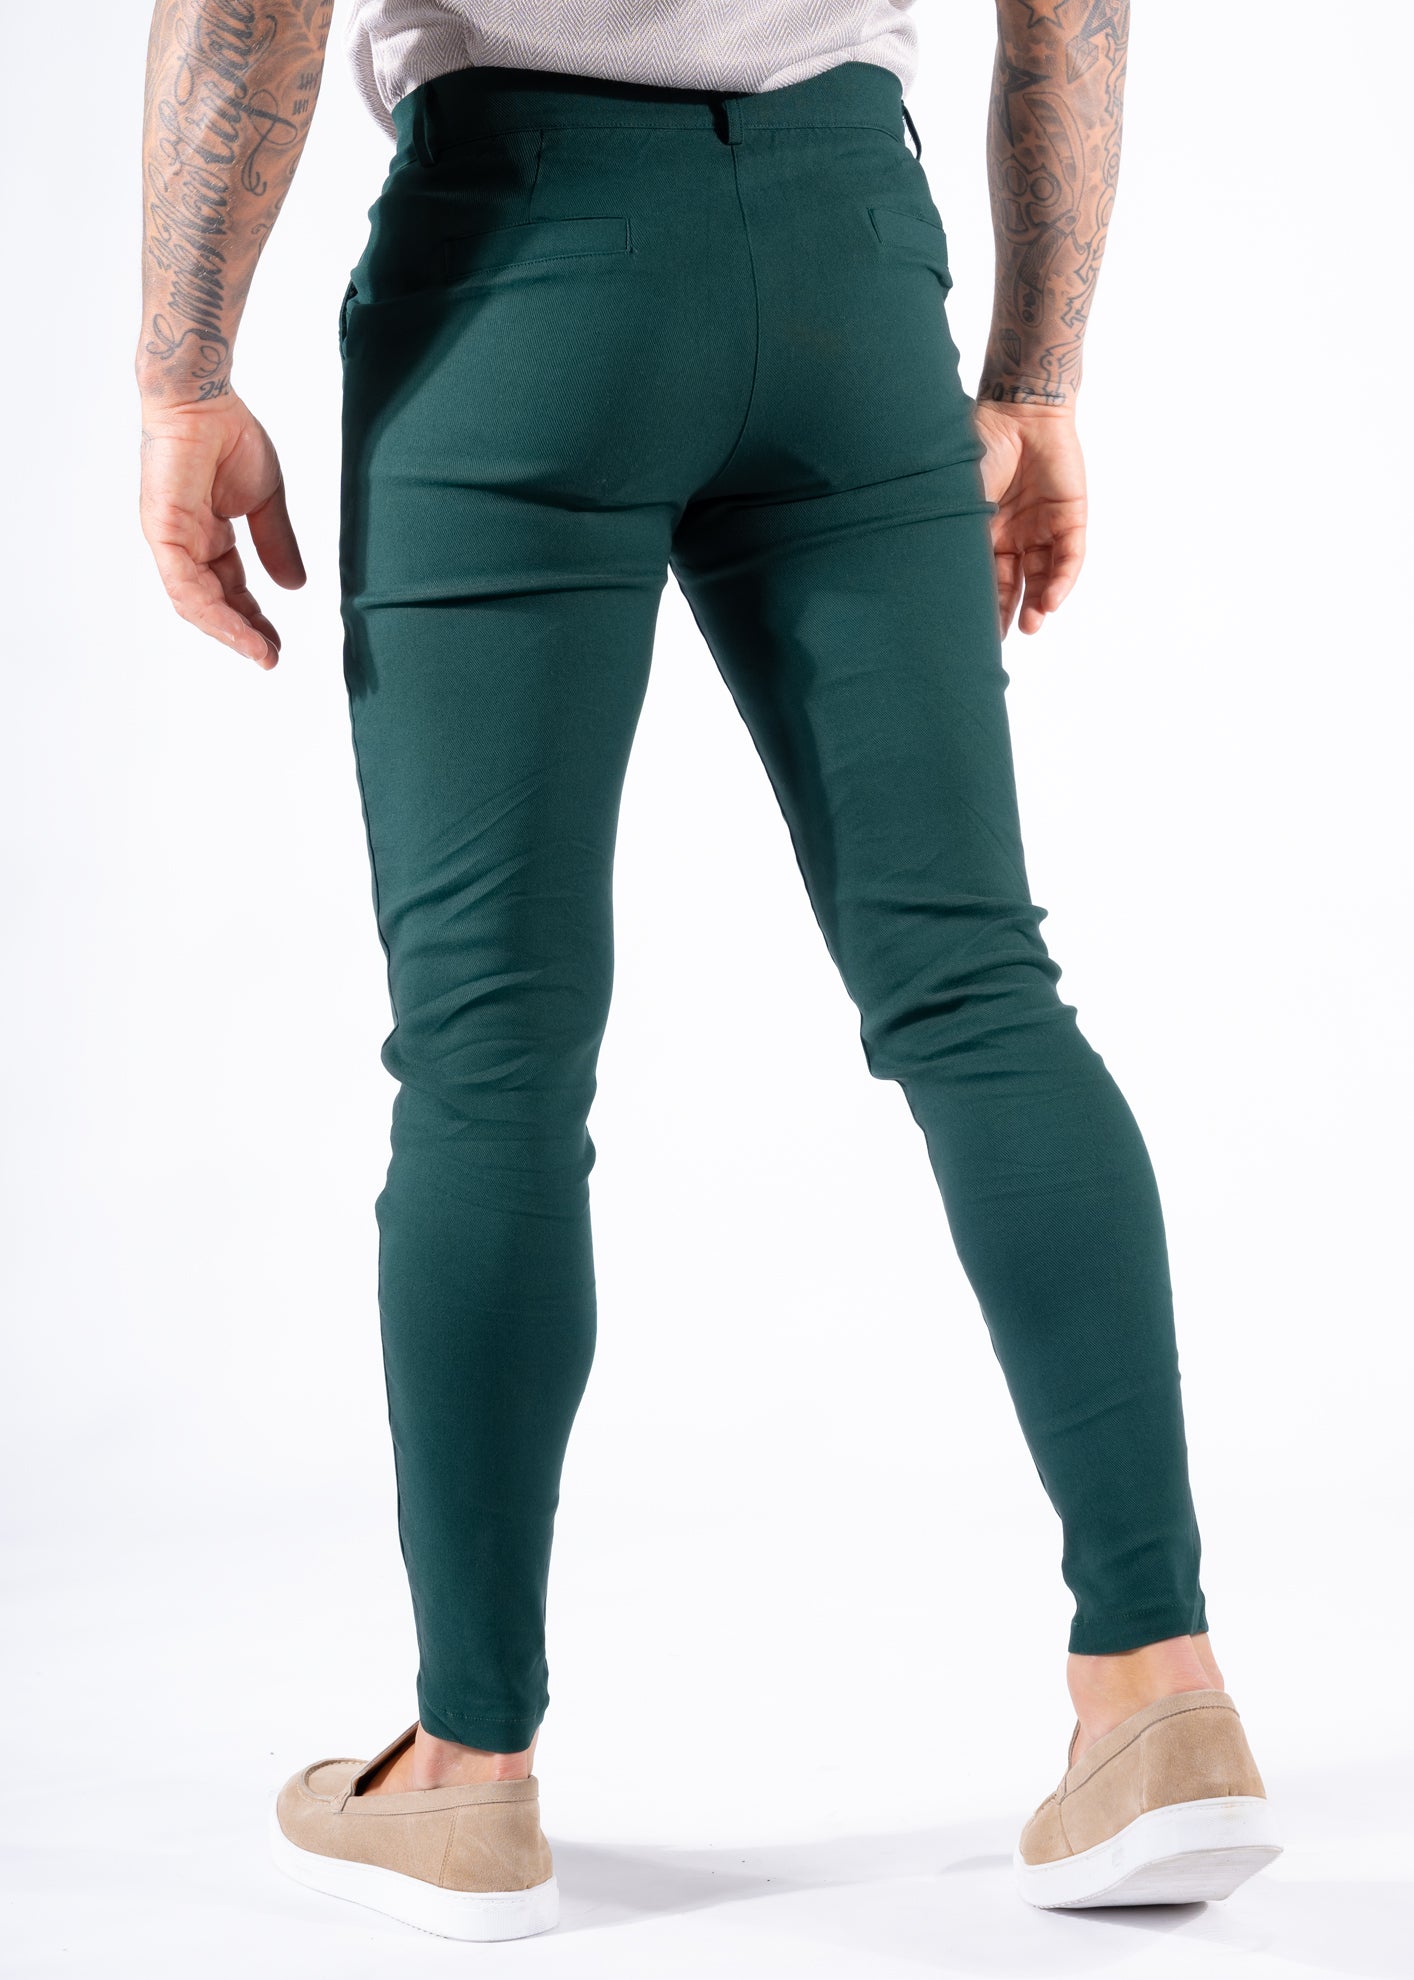 Super stretch pantalon forest green